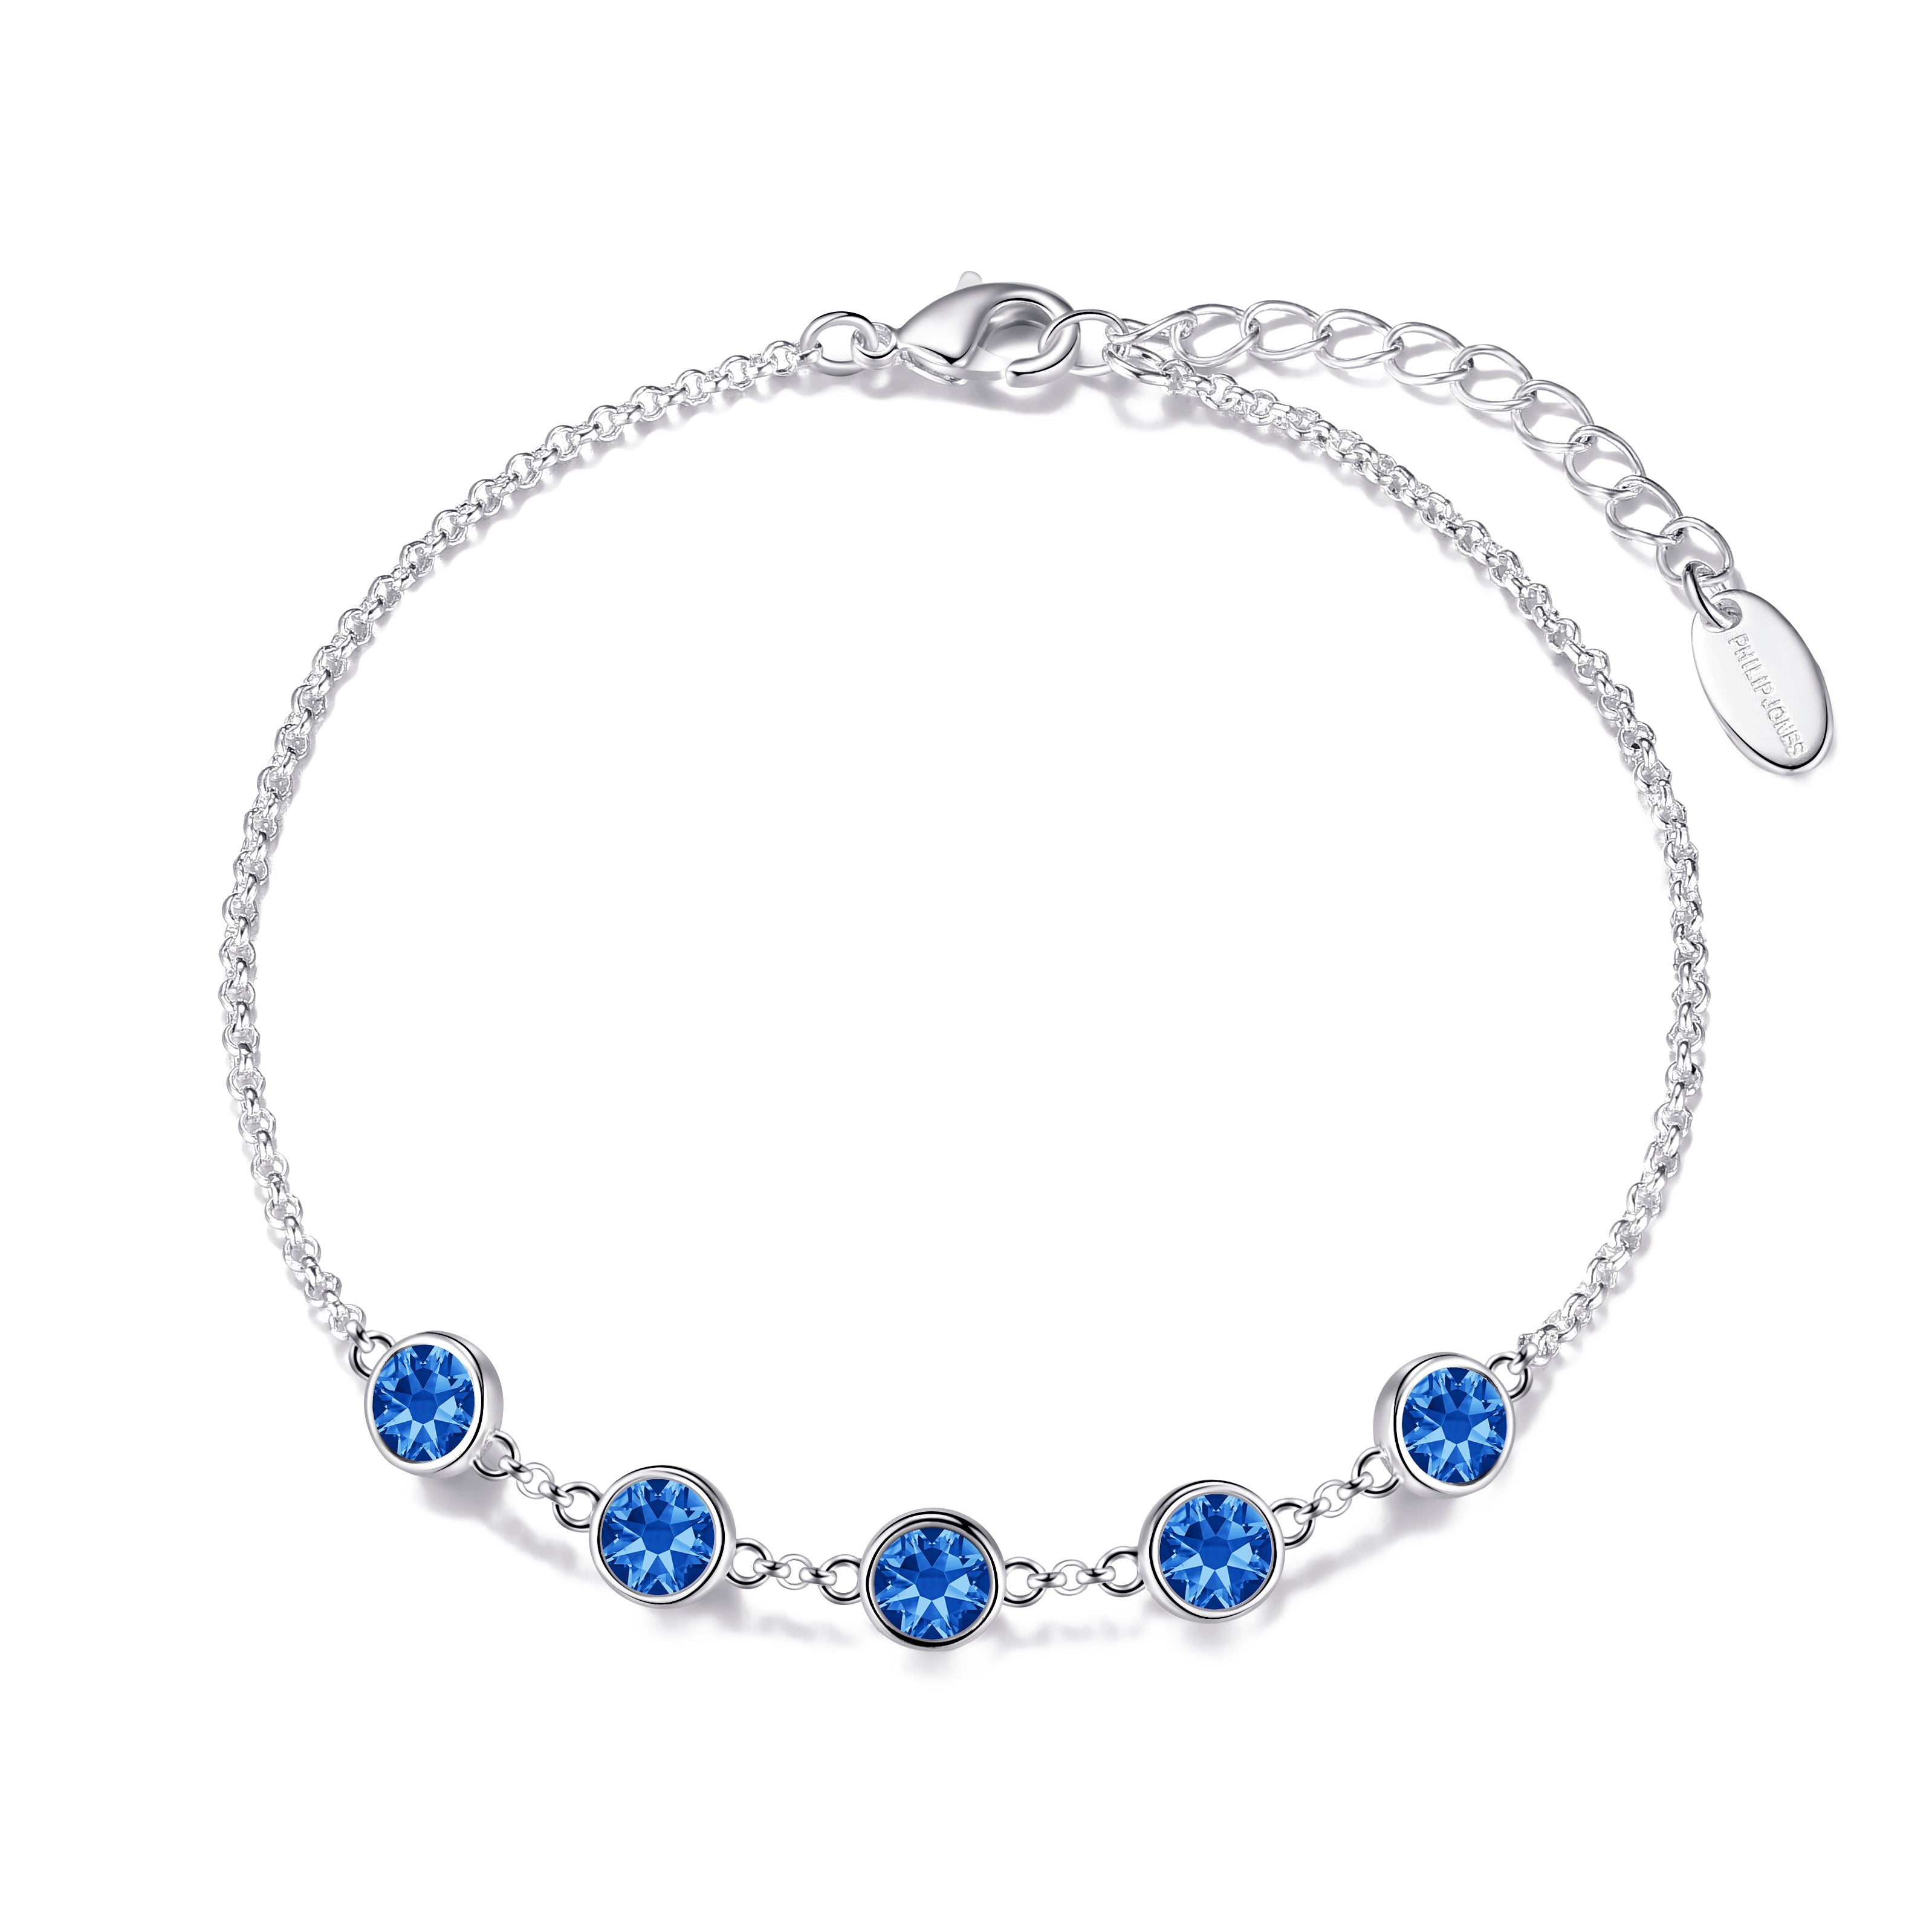 September Birthstone Bracelet Created with Sapphire Zircondia® Crystals